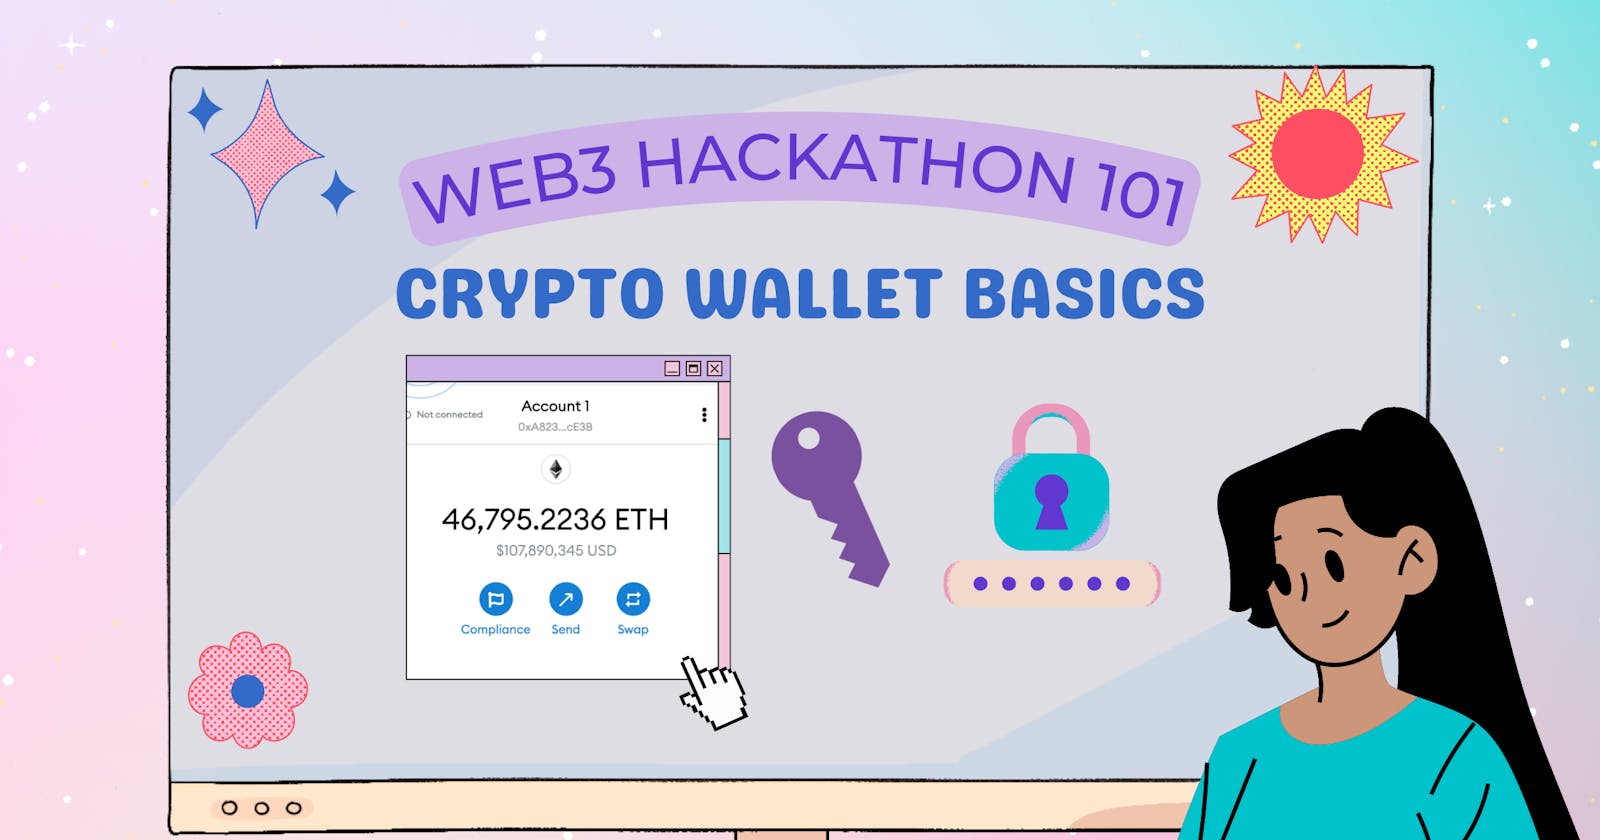 Web3 Hackathon 101: Crypto Wallet Basics